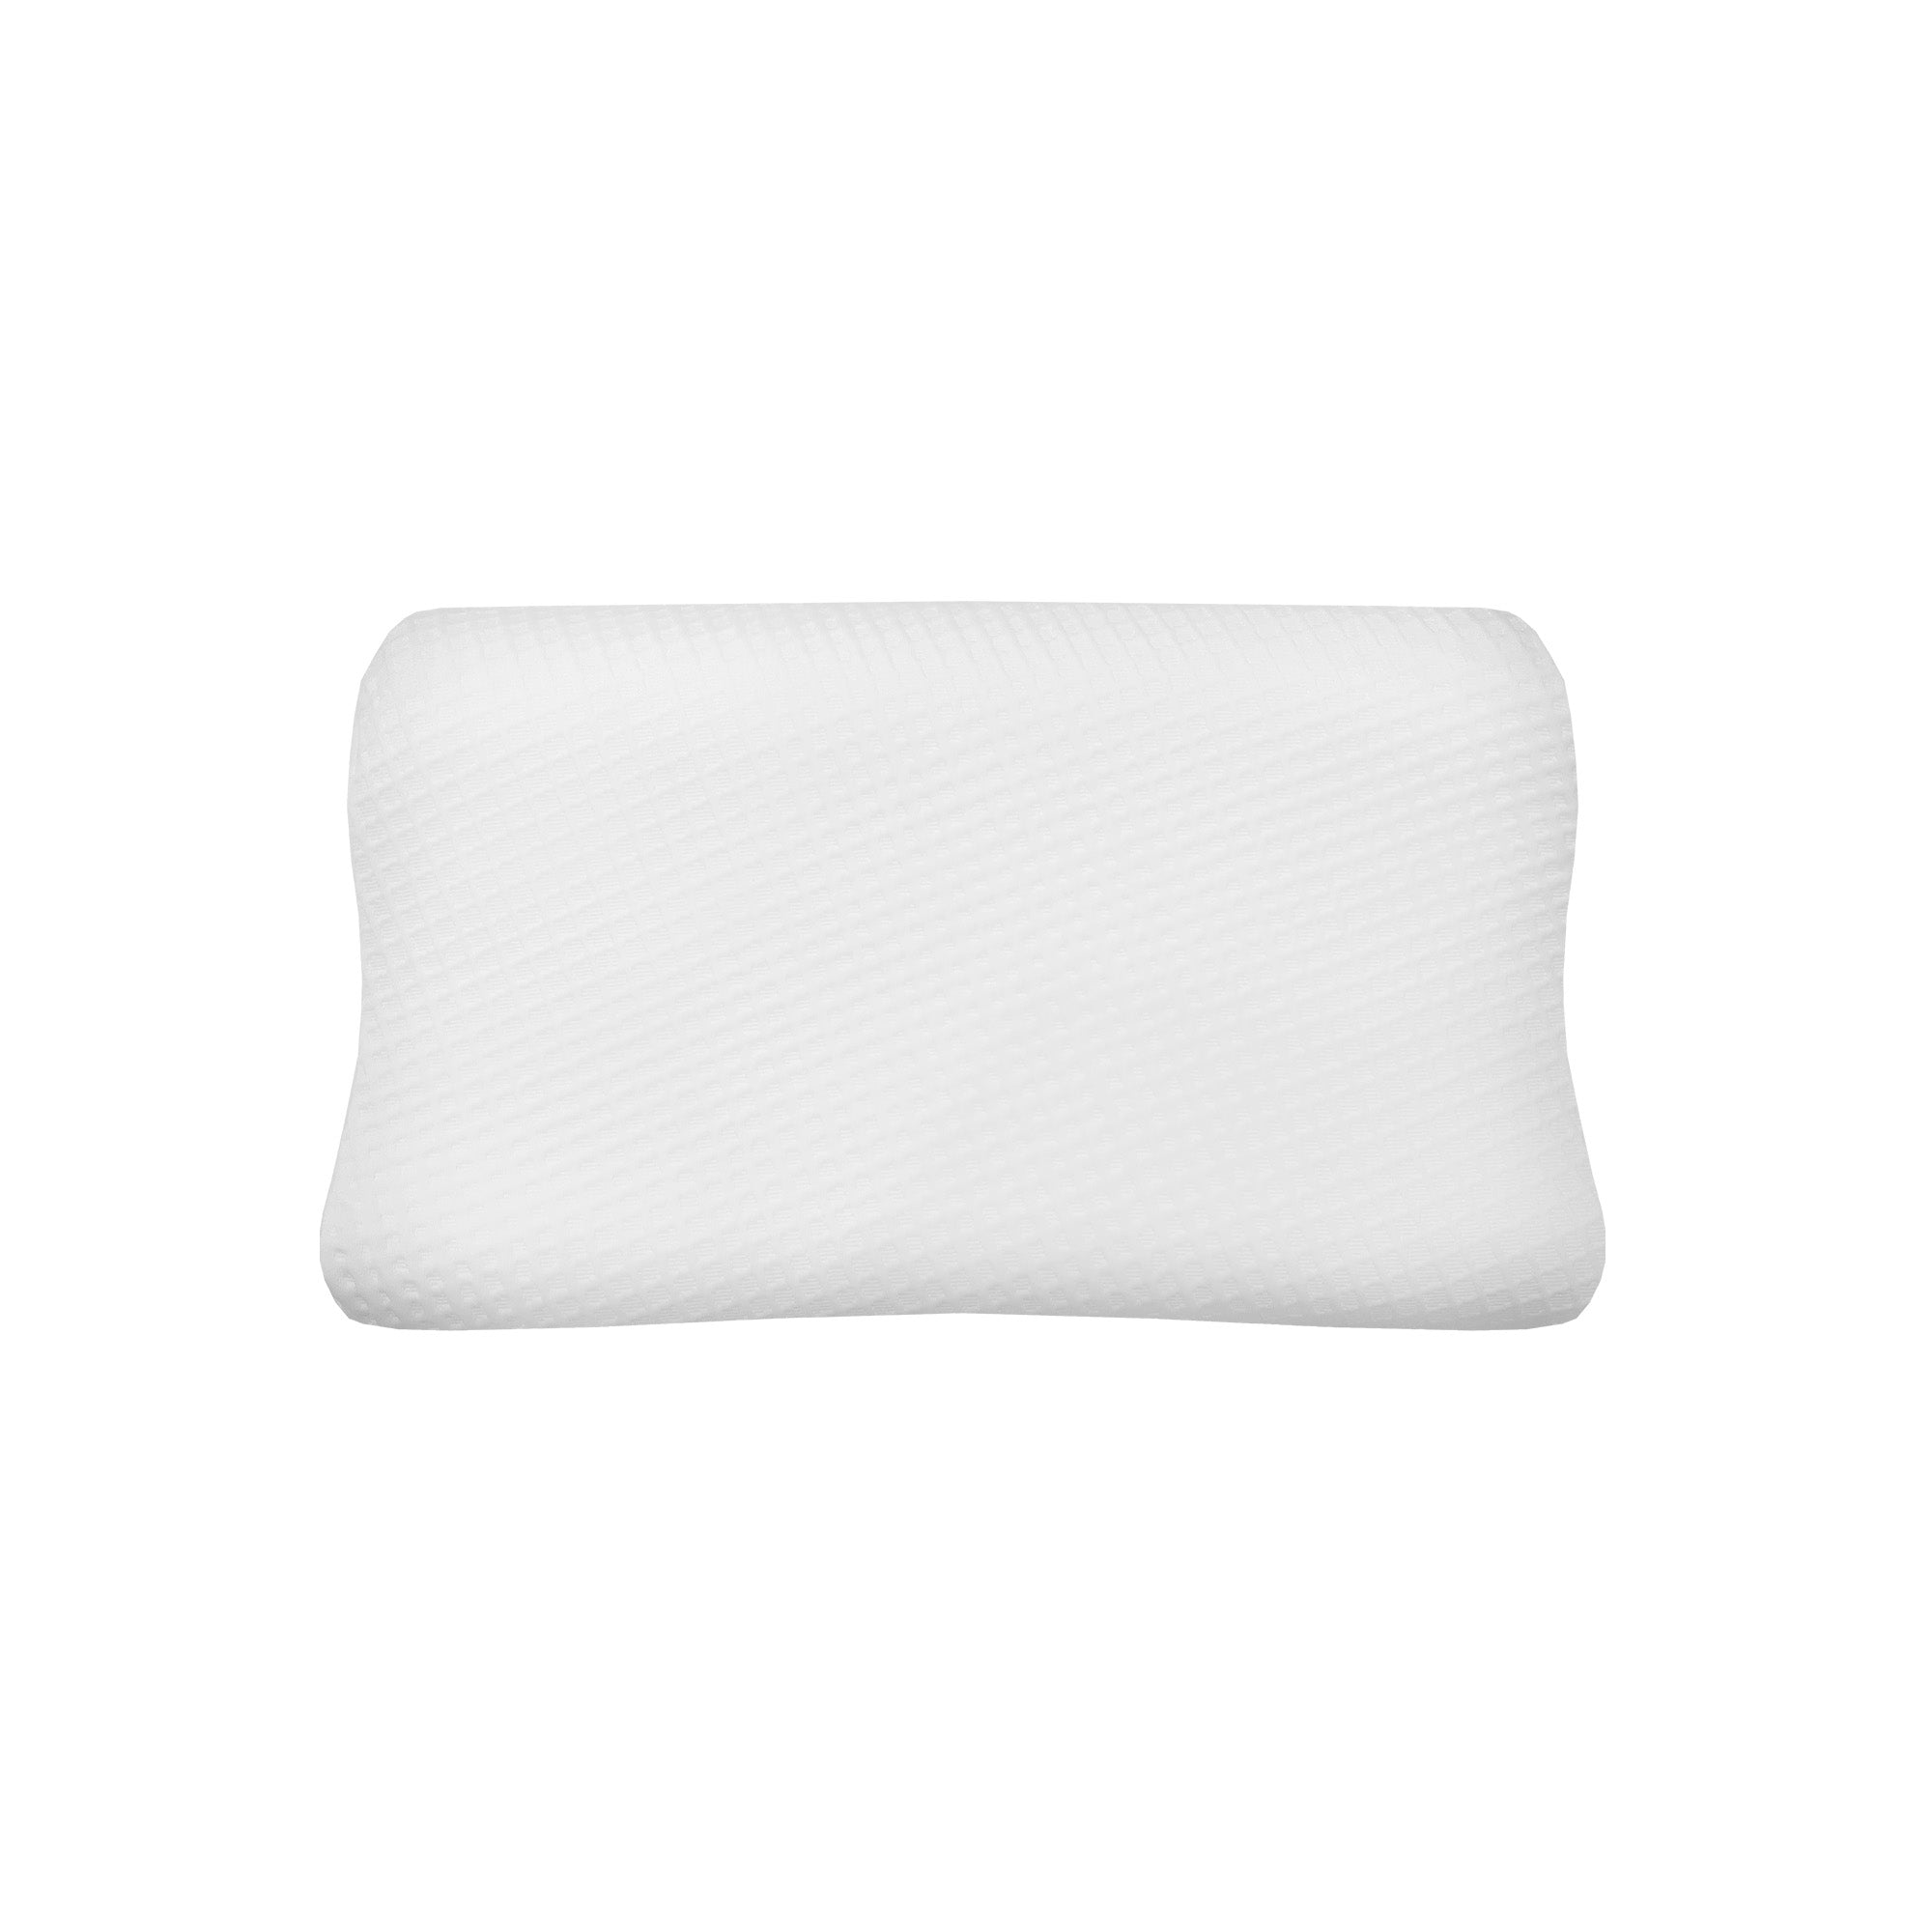 Sealy Contour Memory Foam Pillow